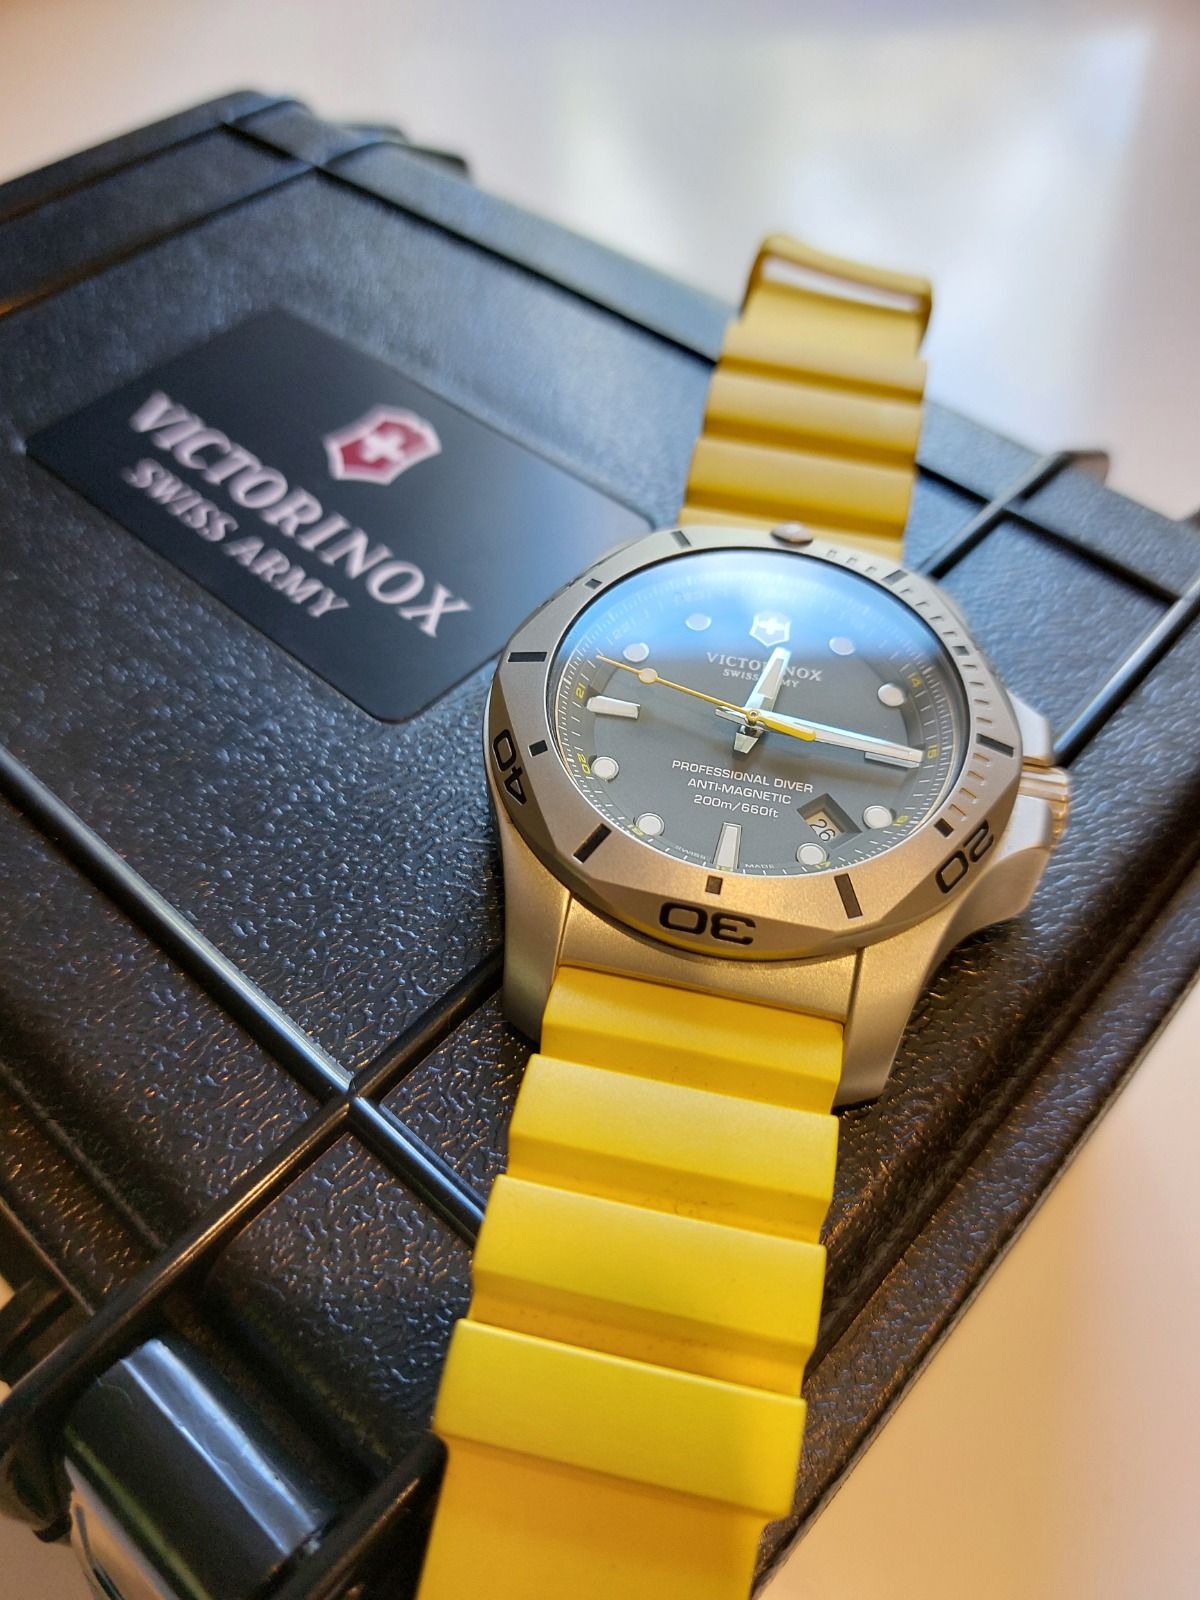 Швейцарские часы Victorinox I.N.O.X. Professional для дайвинга